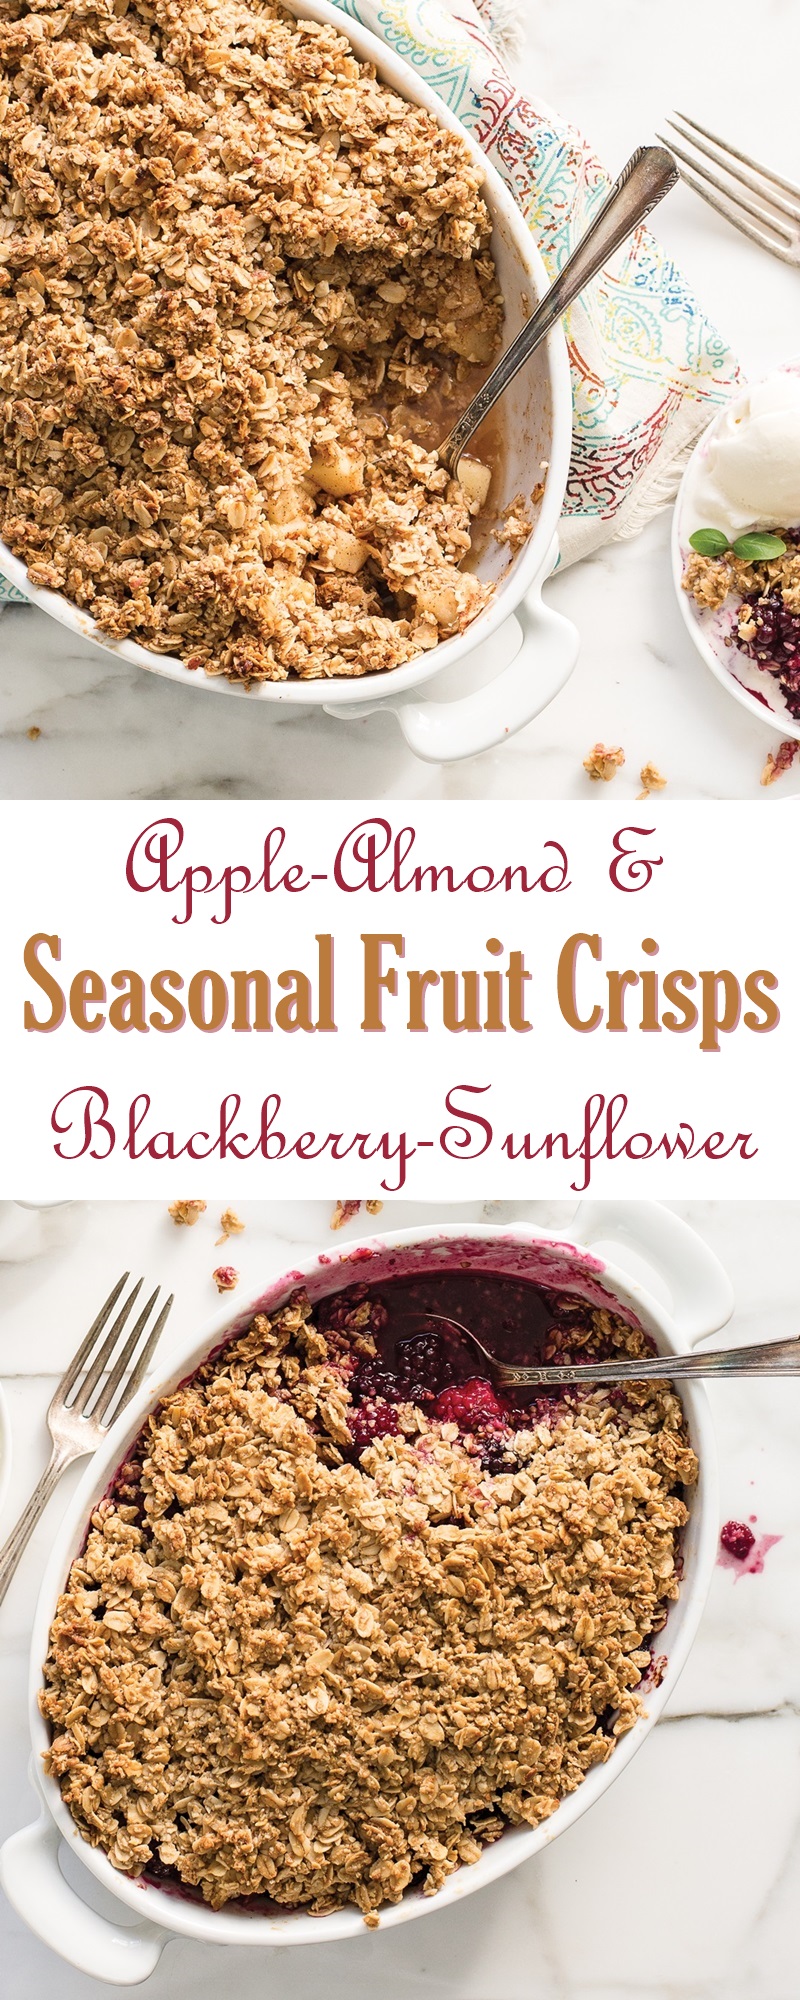 Seasonal Fruit Crisps - Spring + Summer Blackberry Sunflower Crisp Recipe and Fall + Winter Apple Almond Crisp Recipe - vegan, gluten-free, nut-free optional